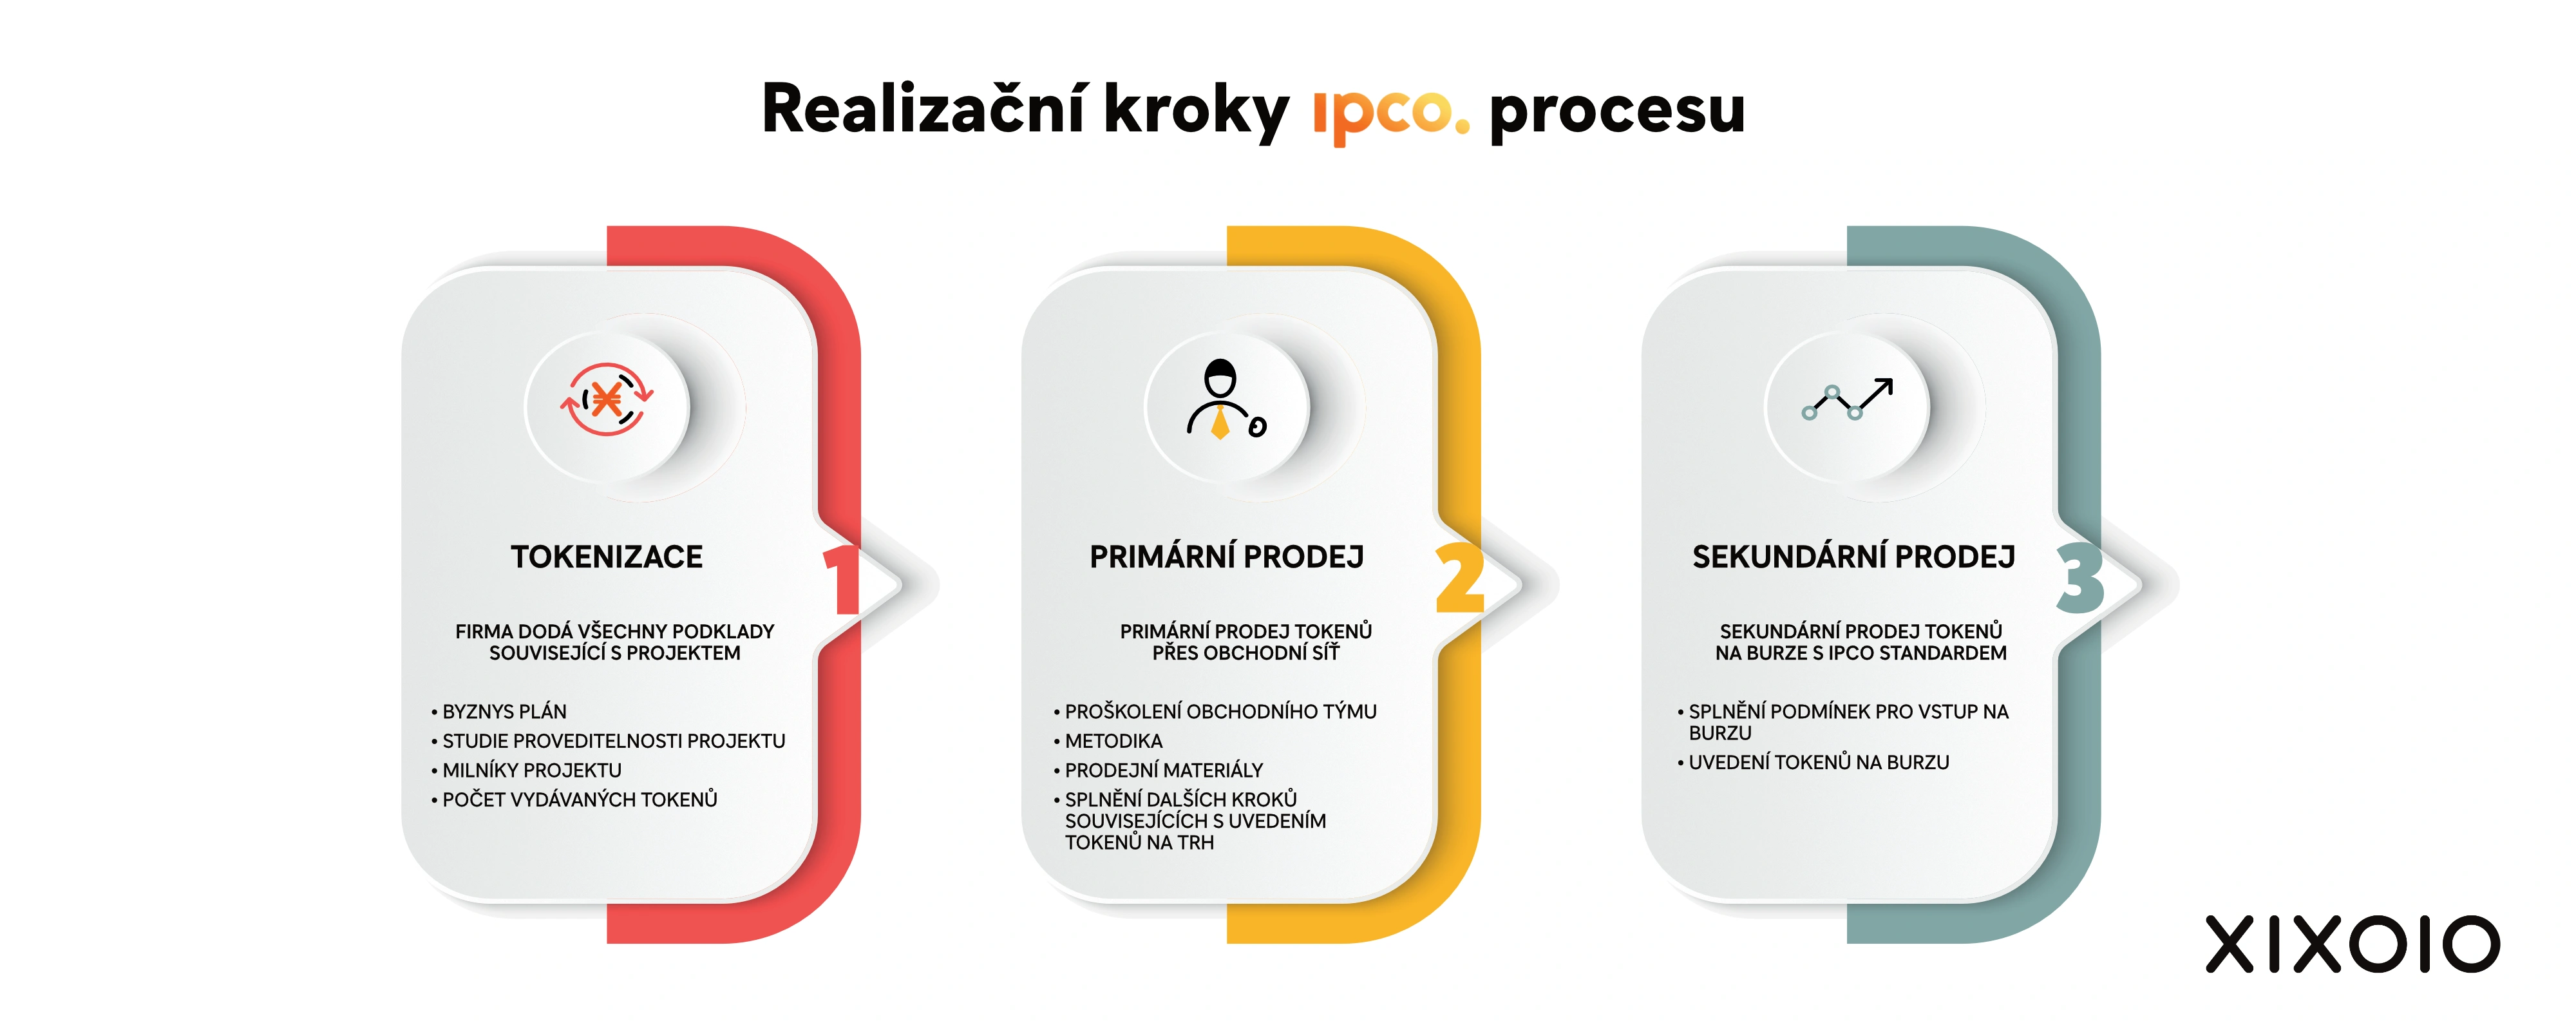 Realizační kroky IPCO procesu